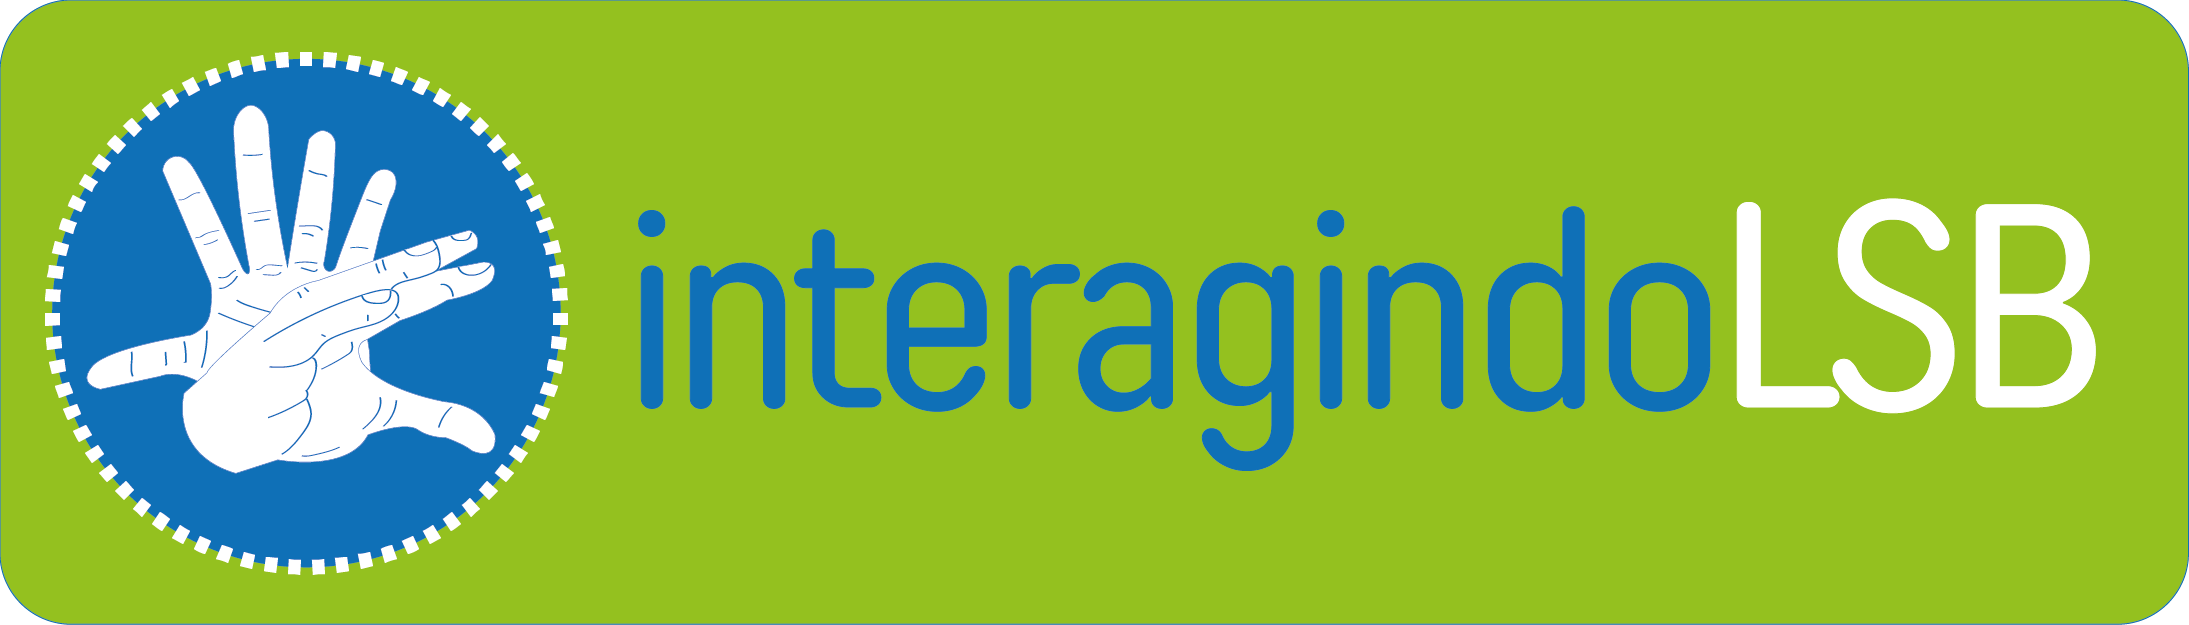 Logo Interagindolsb